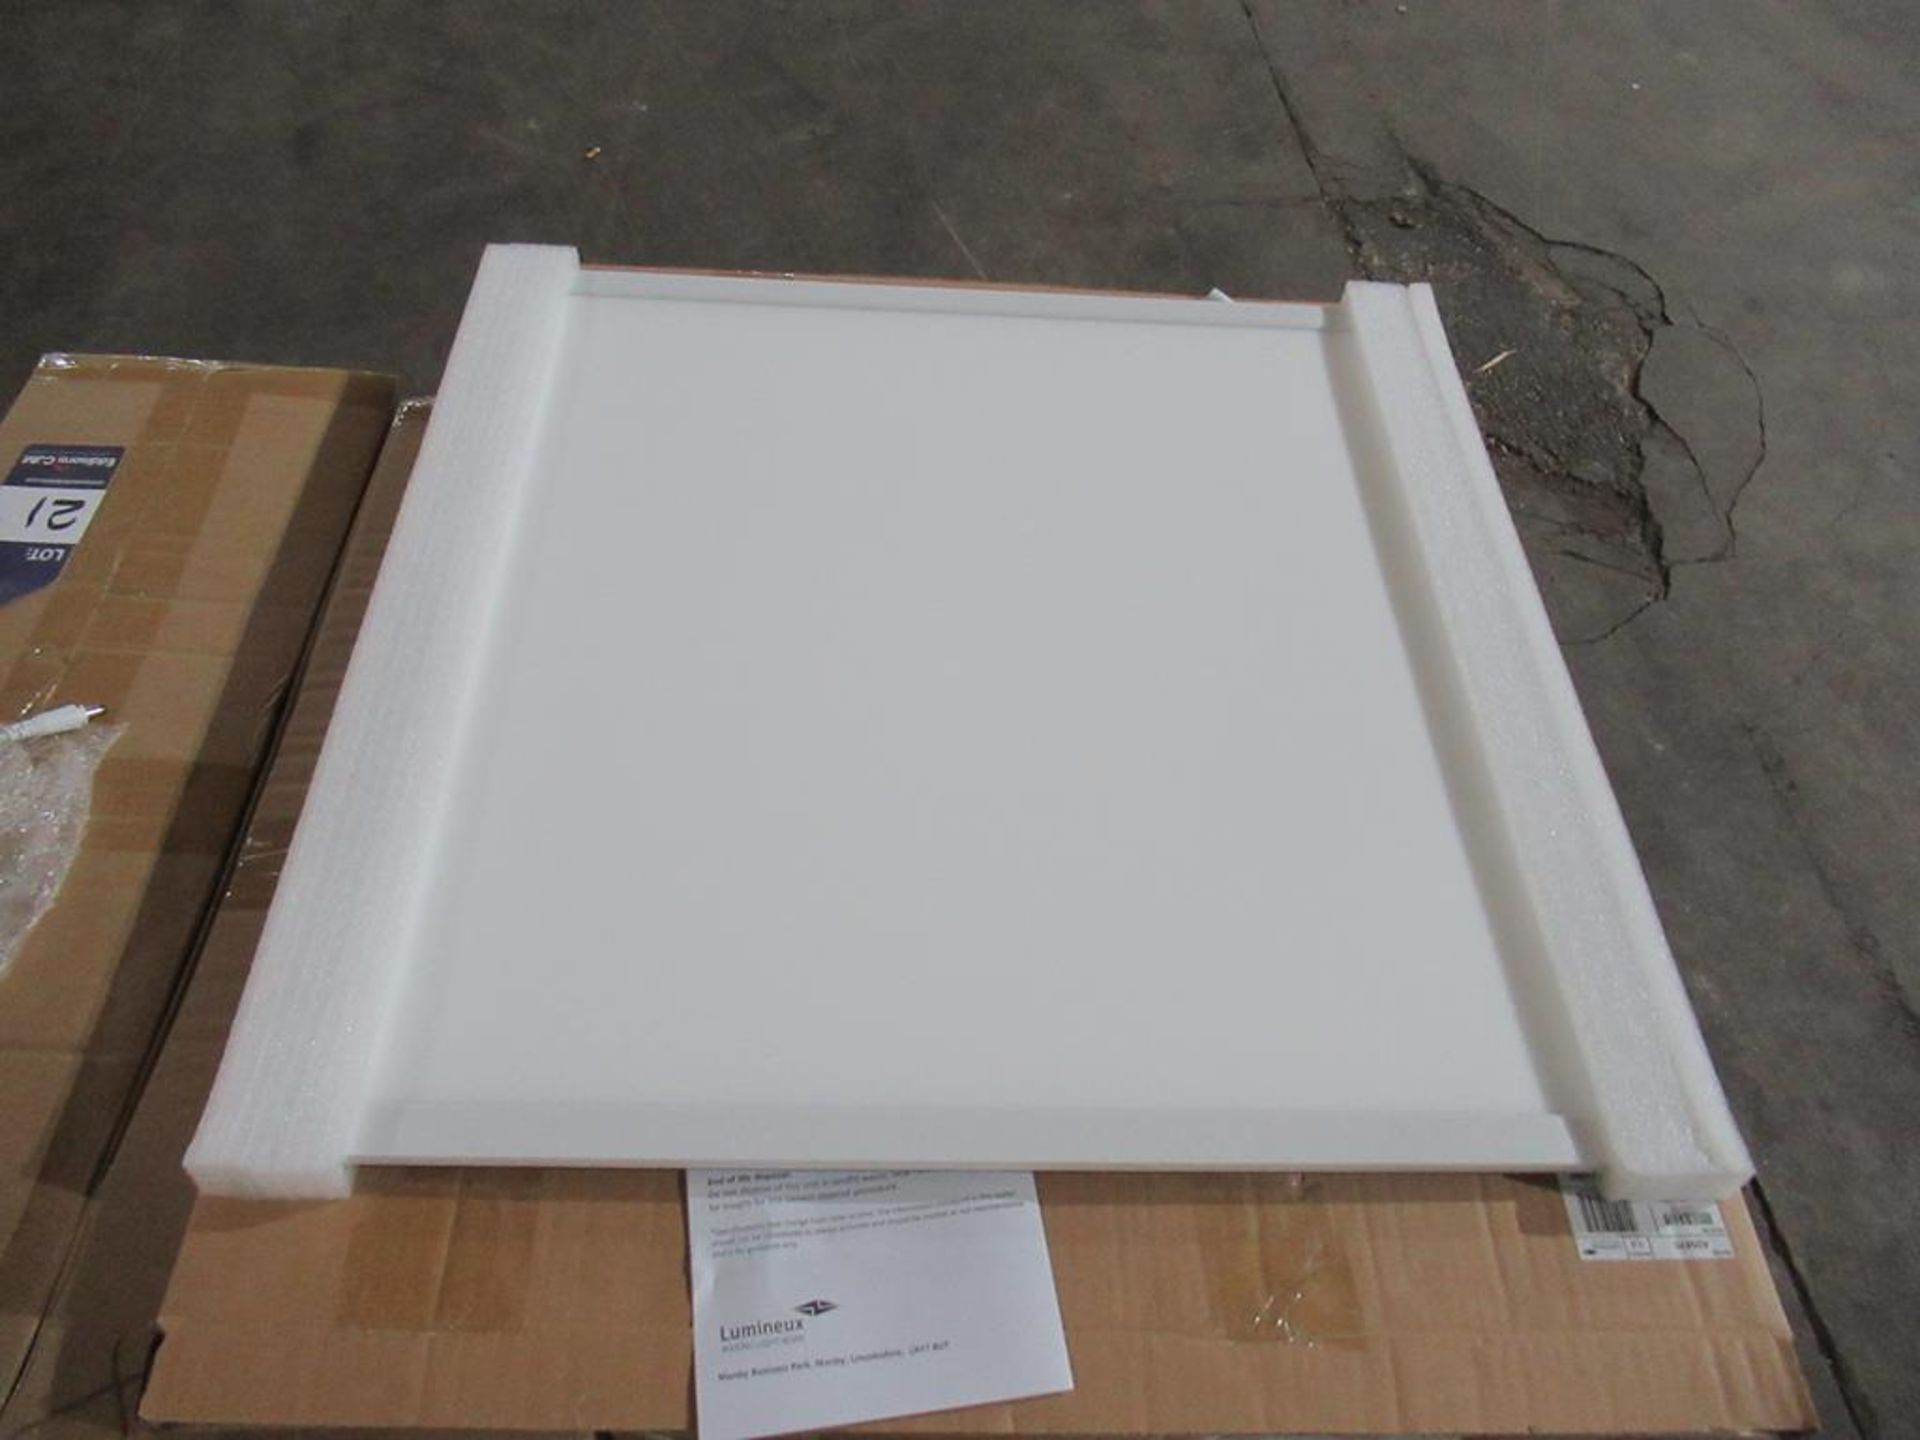 20 x LED 32W Edge Lit Panel 600x600 TP(a) White OEM Trade Price £440